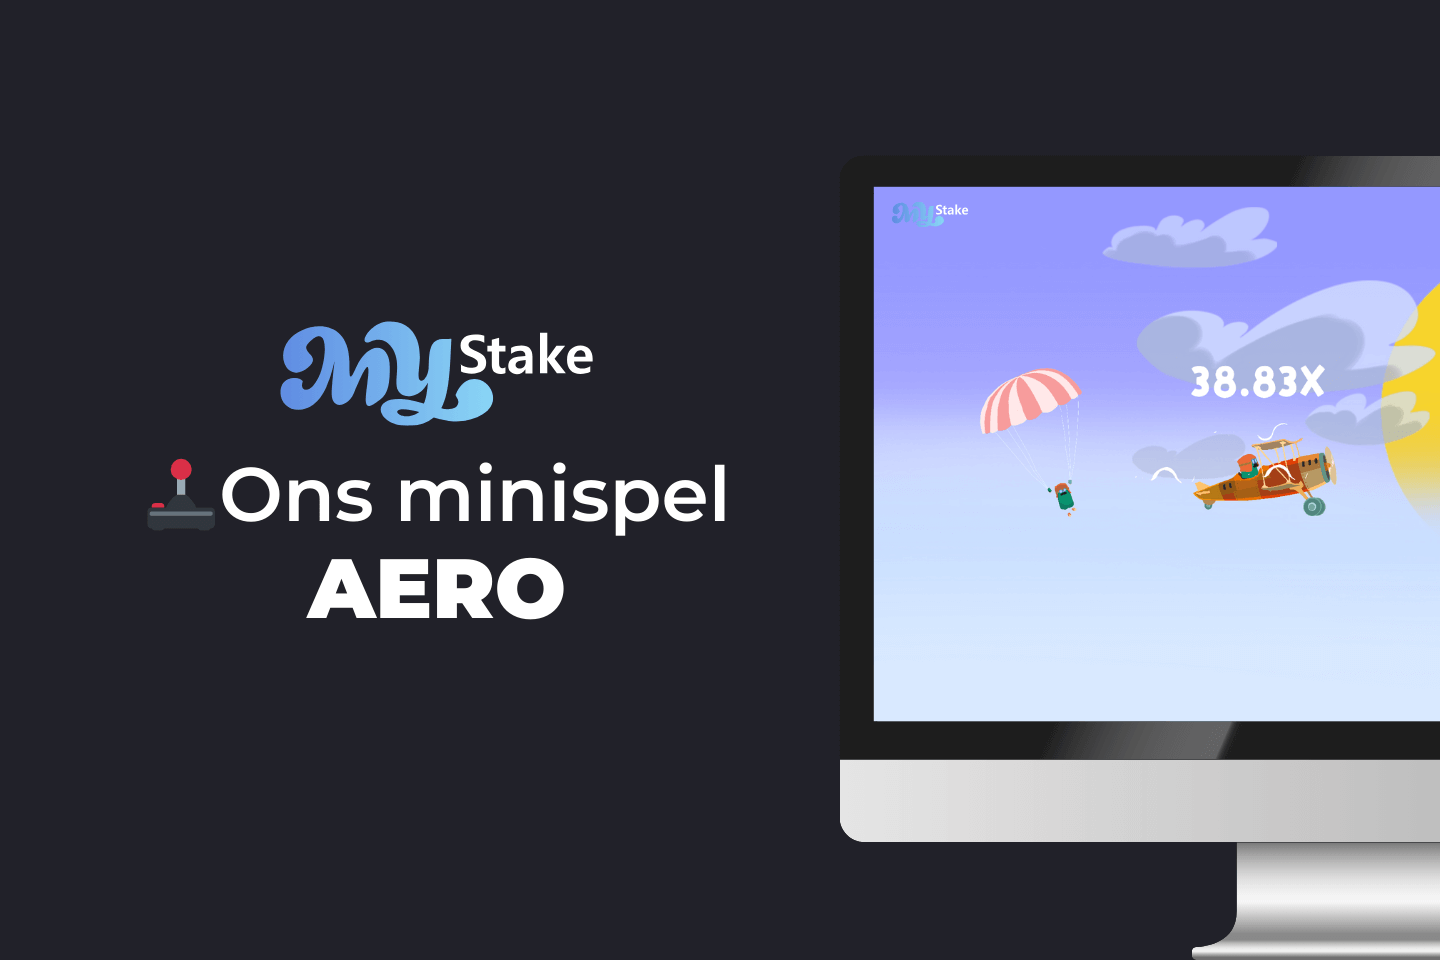 Aero: De Mystake crash mini-game